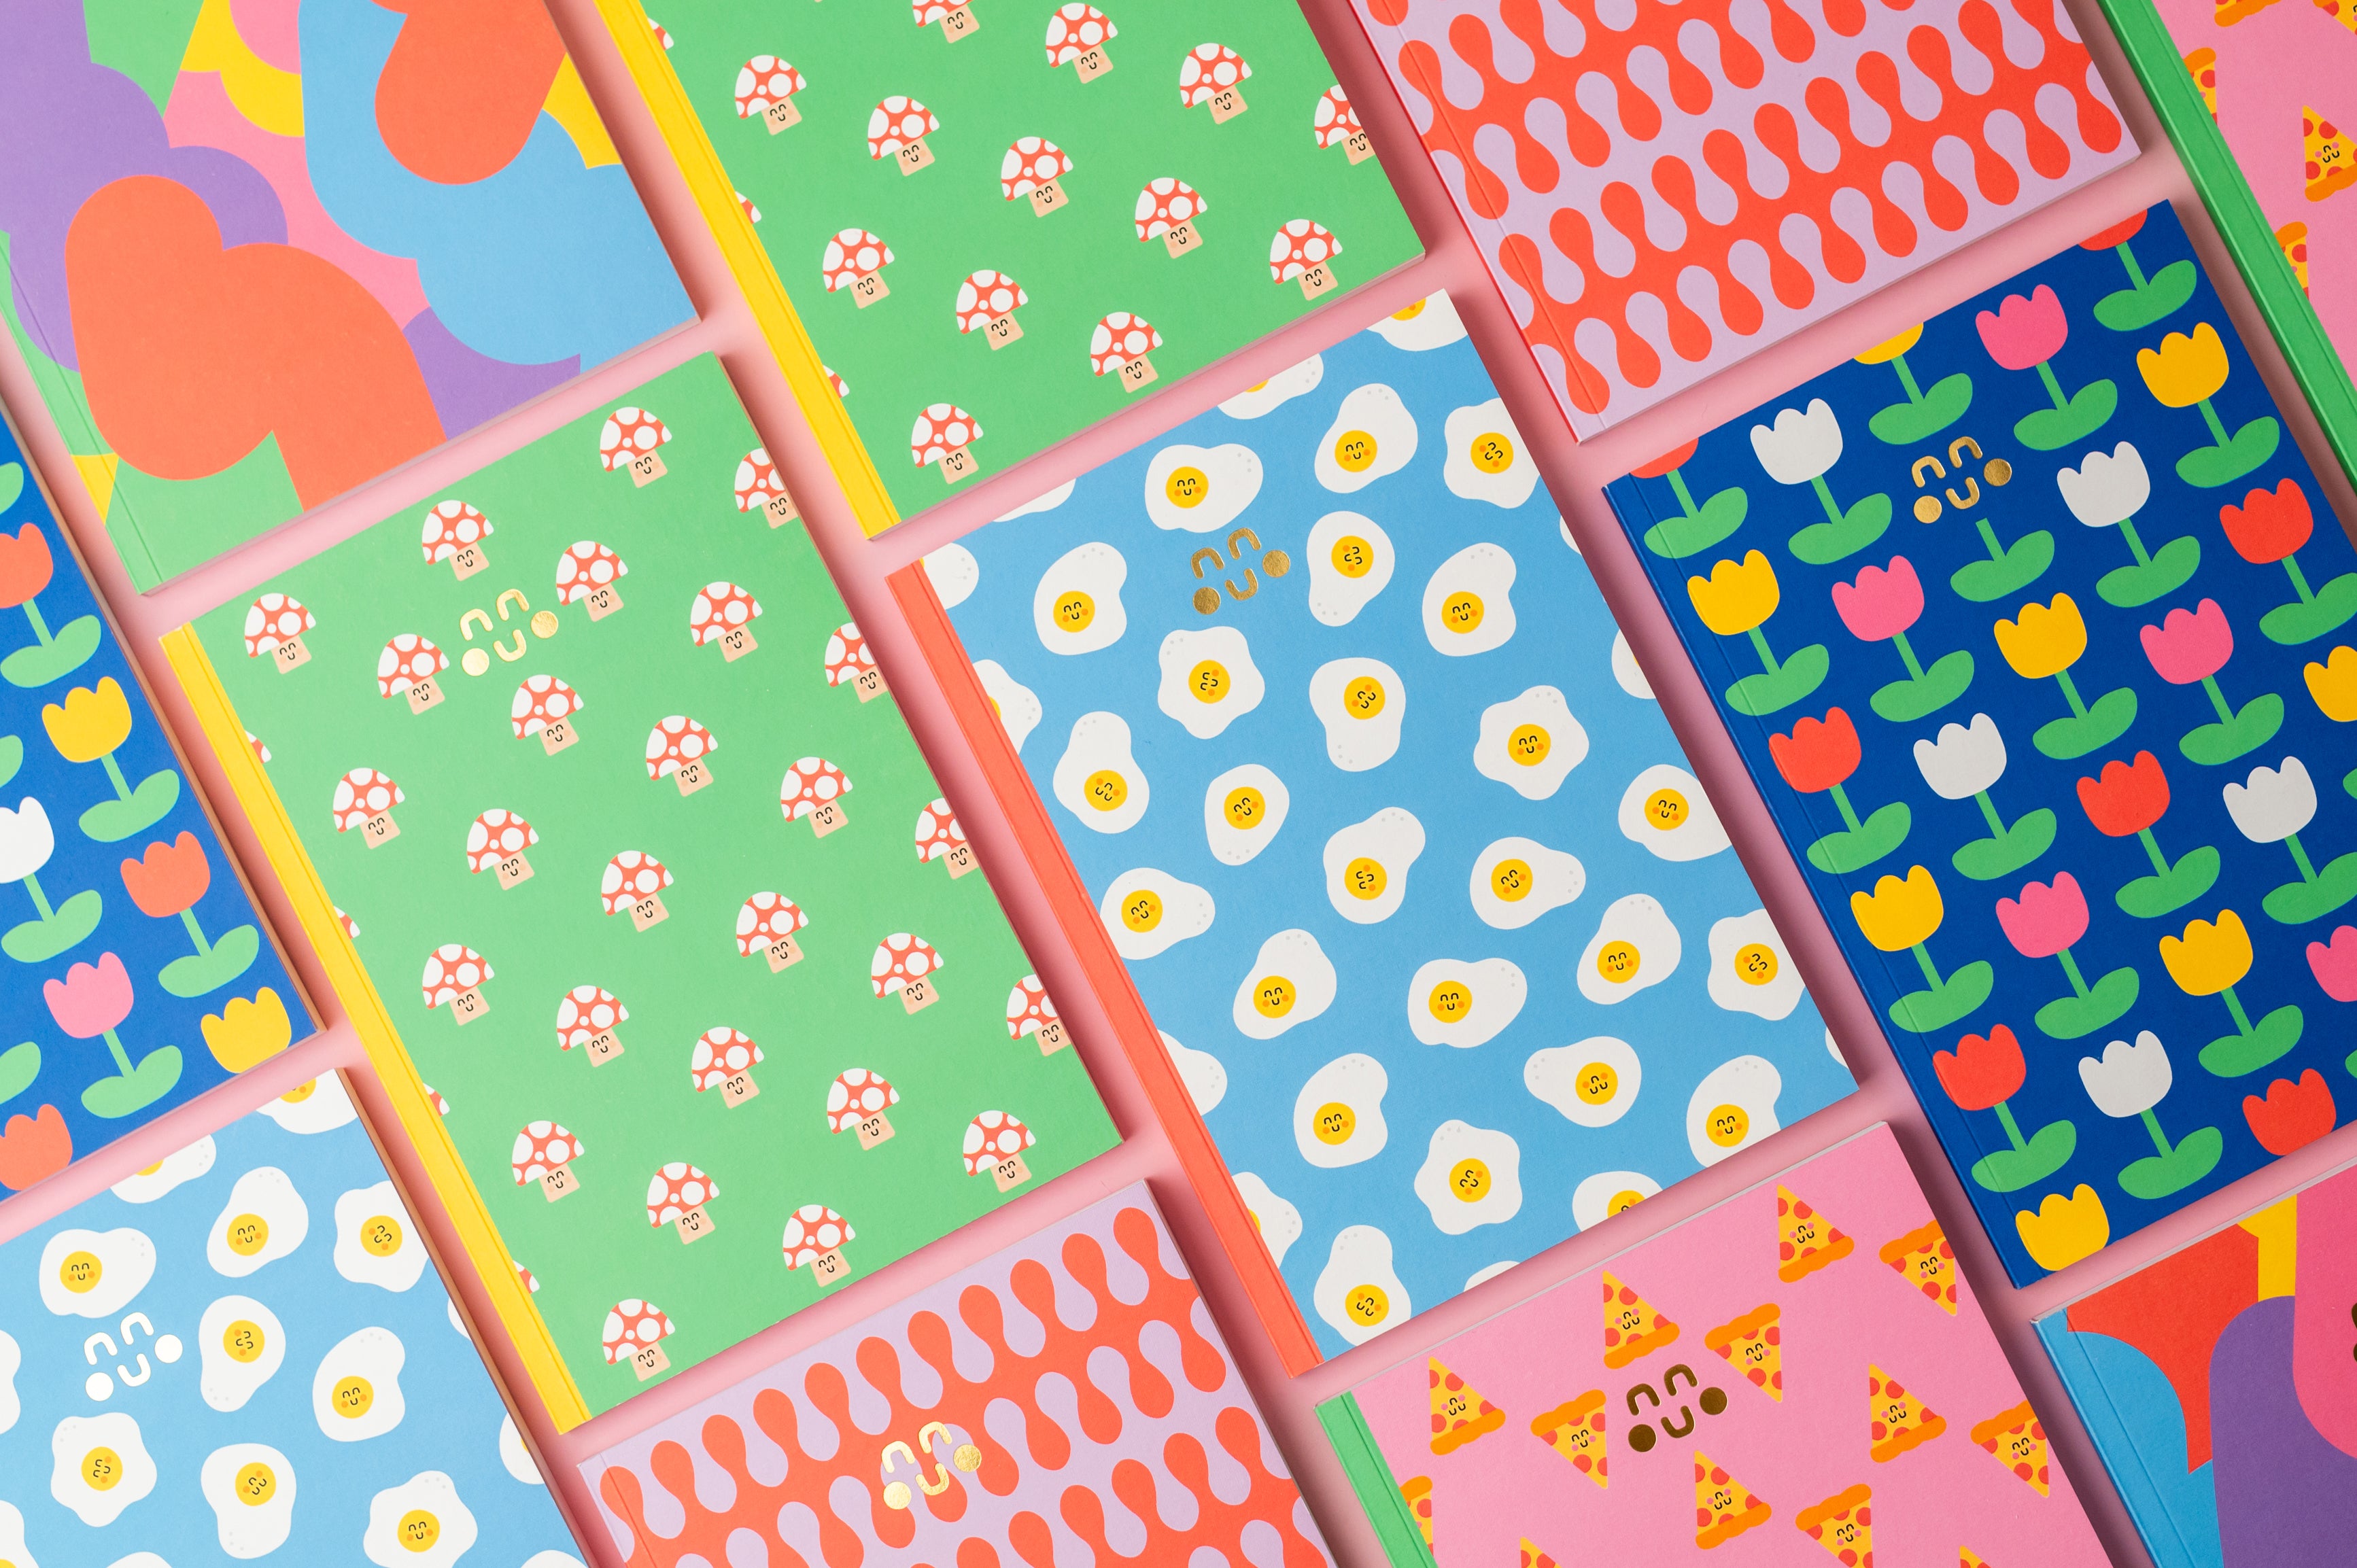 egg pattern, pizza pattern, mushroom pattern notebooks on a pink background